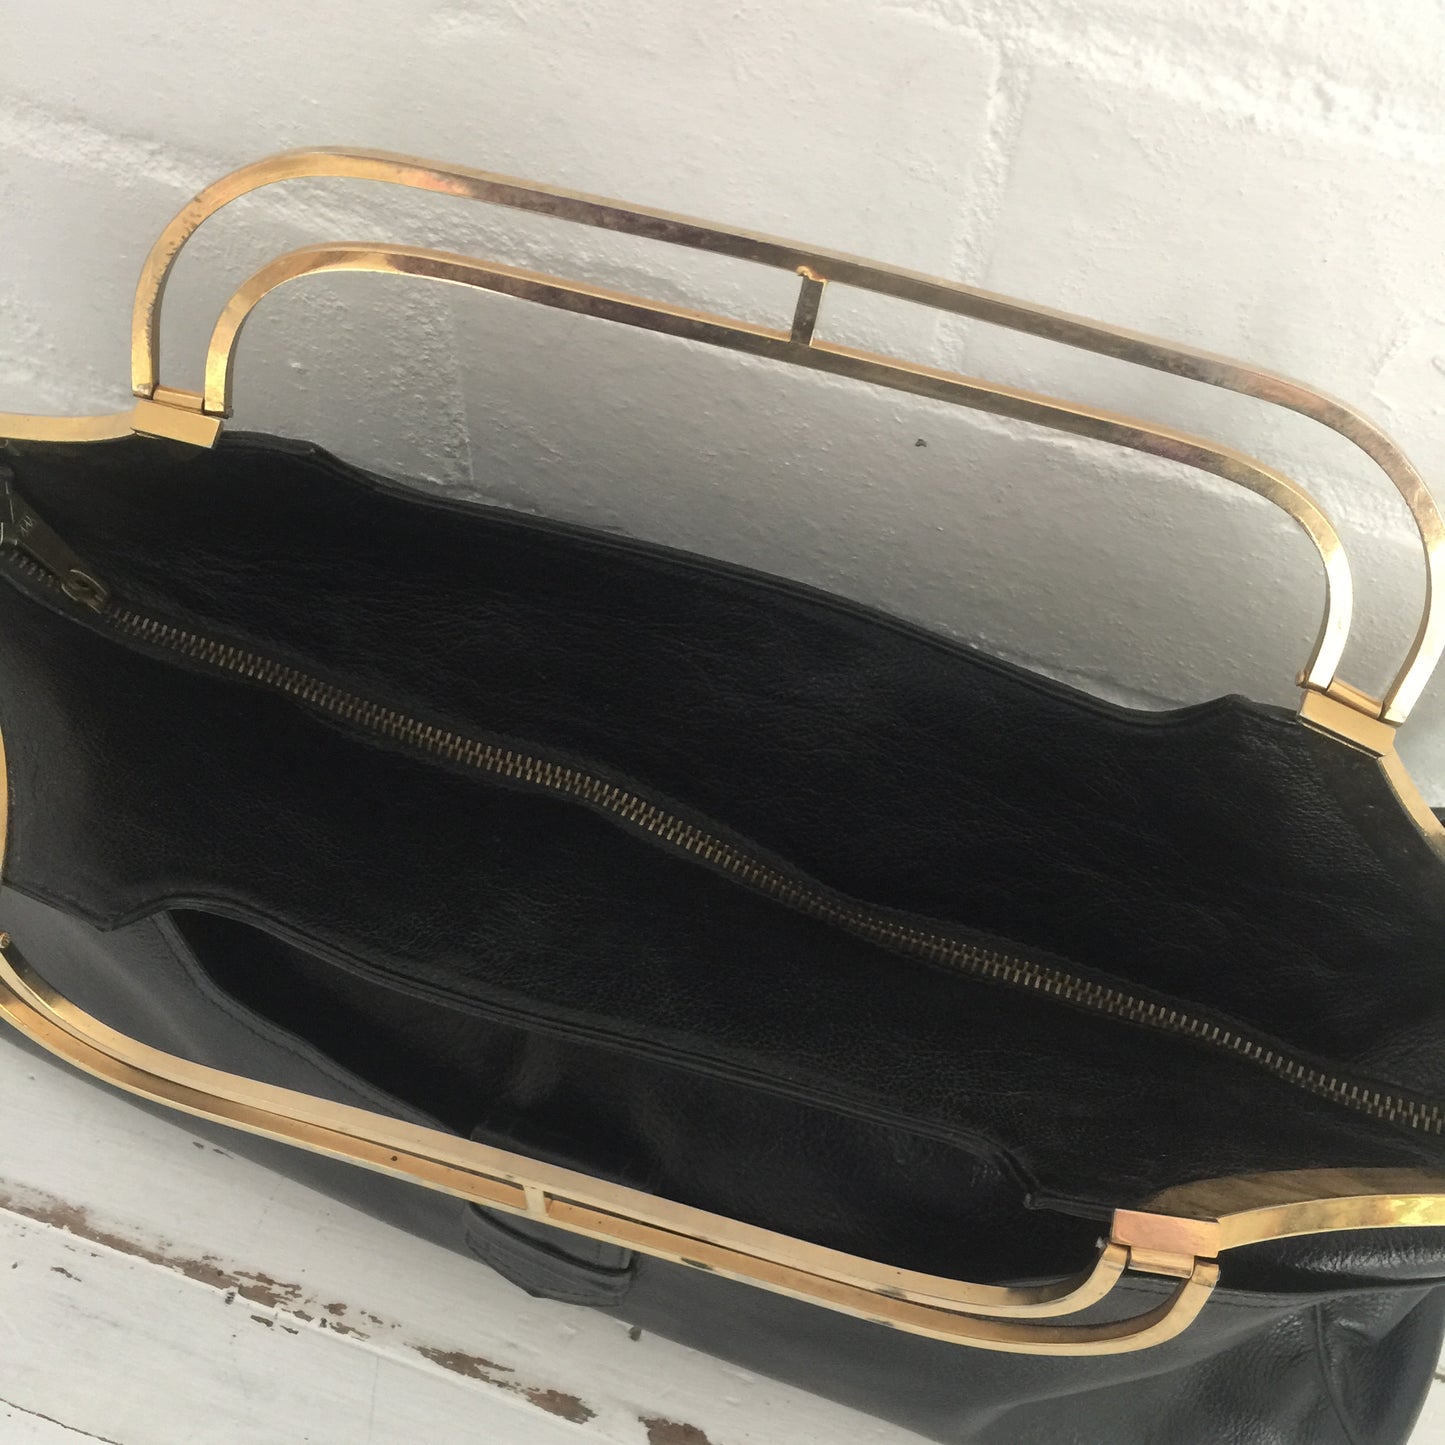 AMAZING Genuine LEATHER Handbag COOL Gold Handles